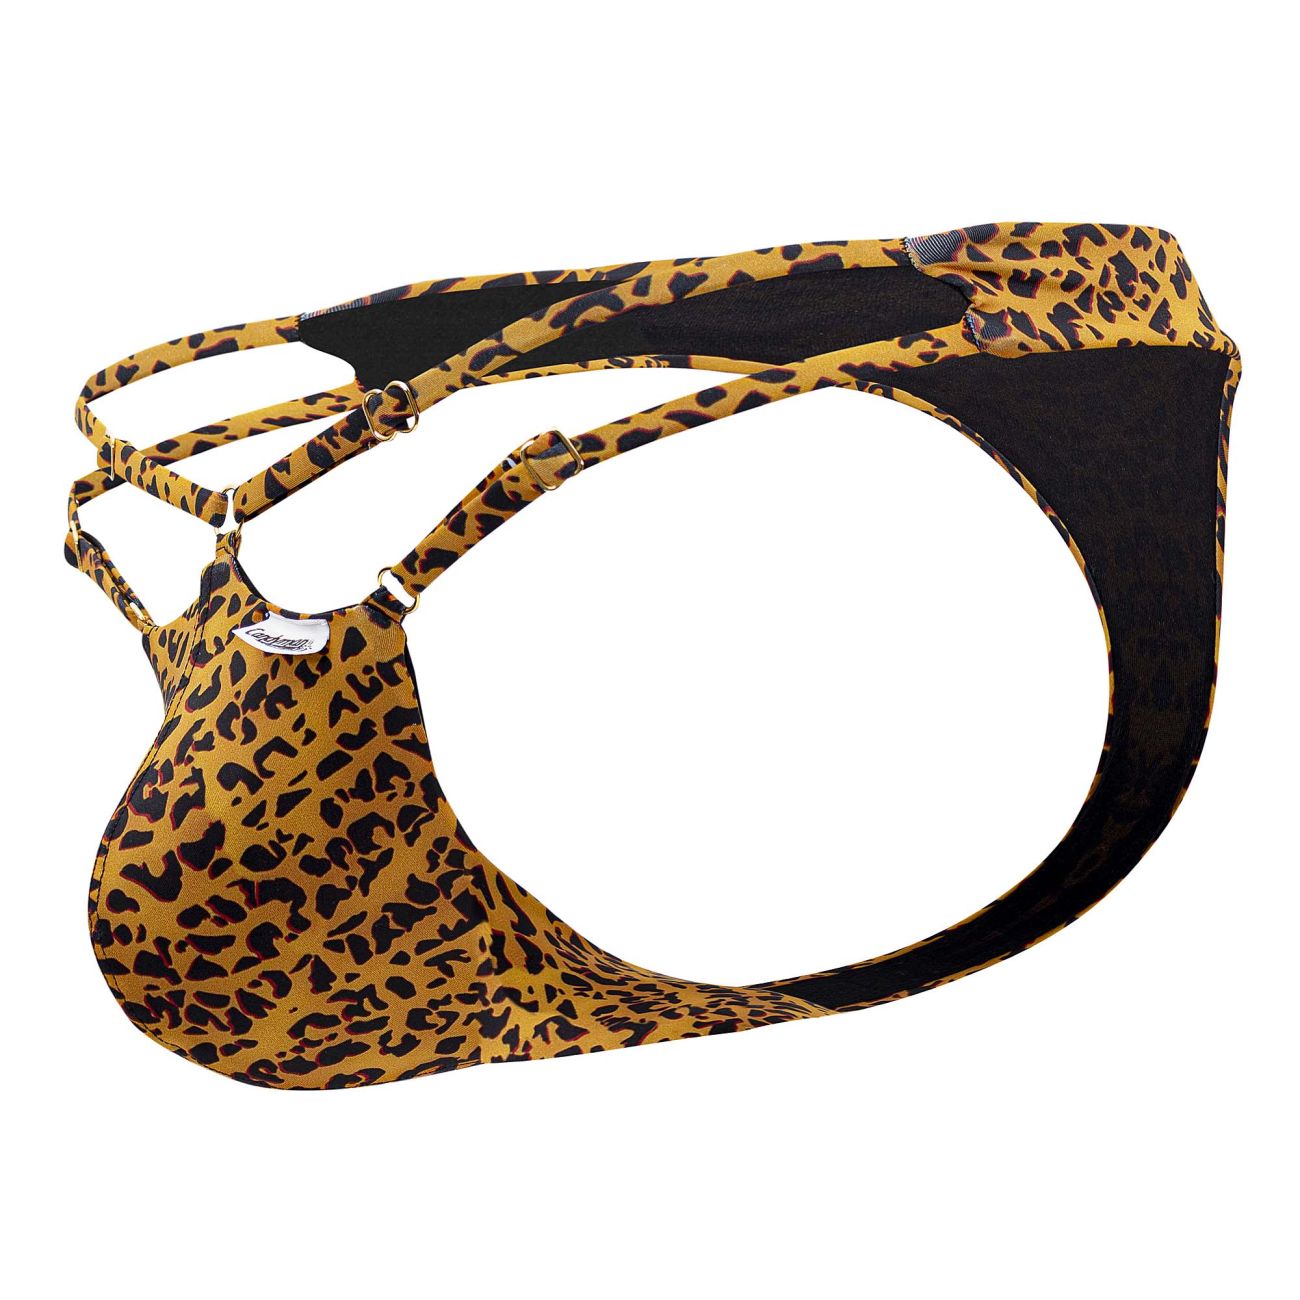 CandyMan 99712 Safari Thongs Leopard Print